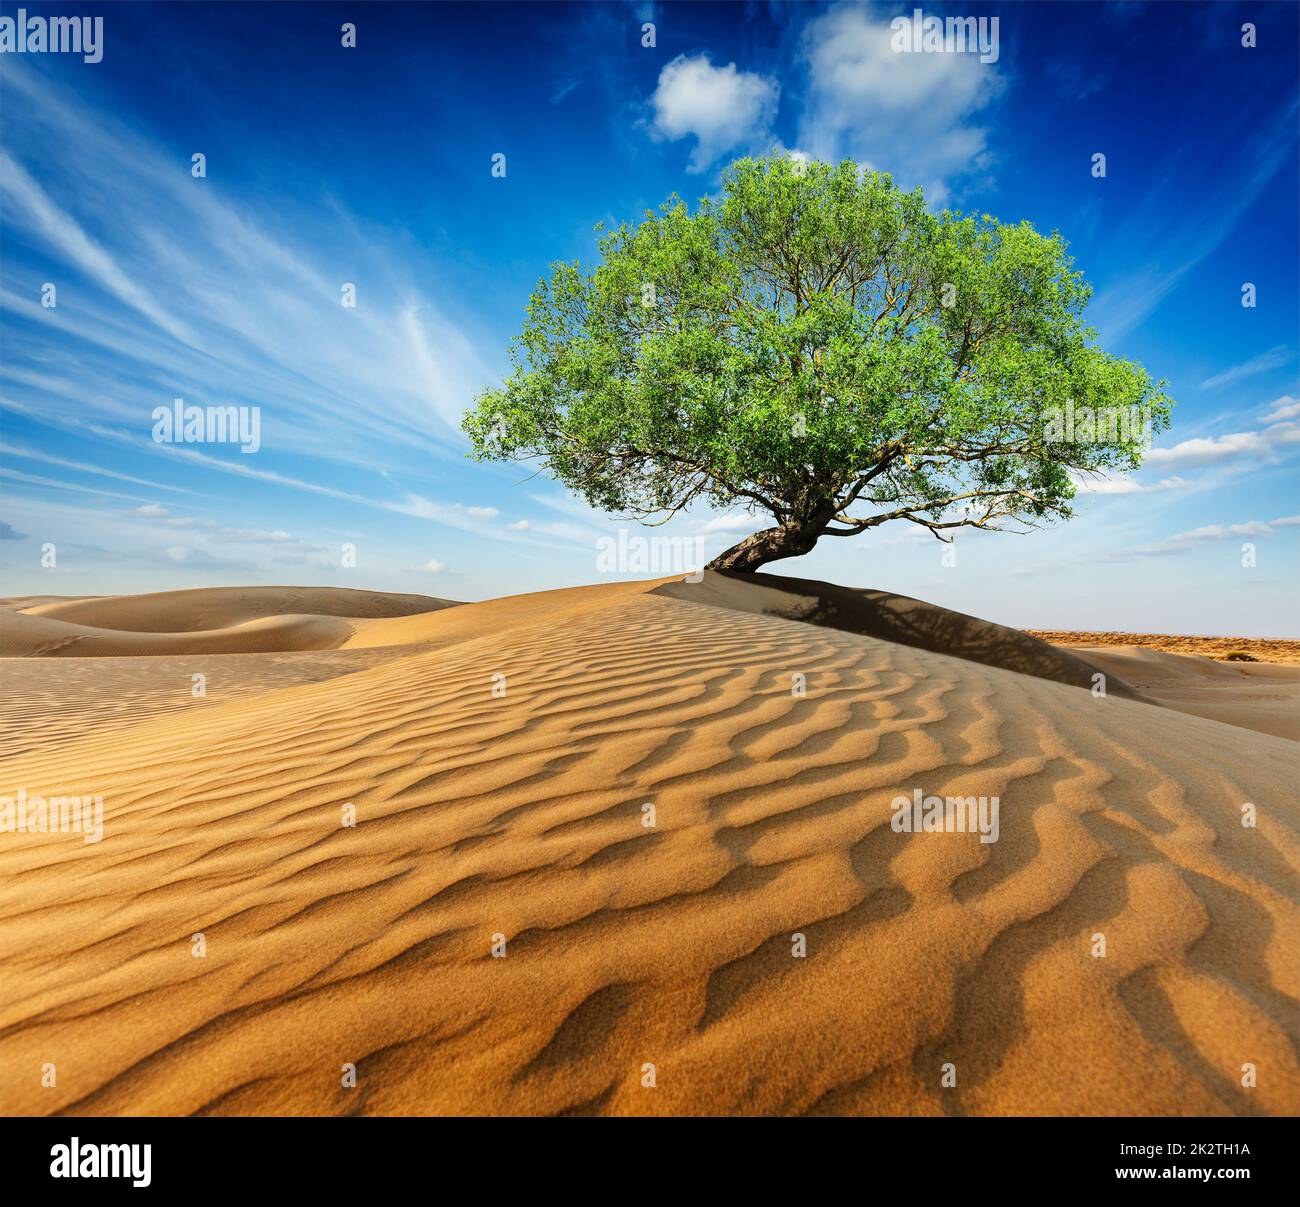 Lonely green tree in desert dunes Stock Photo